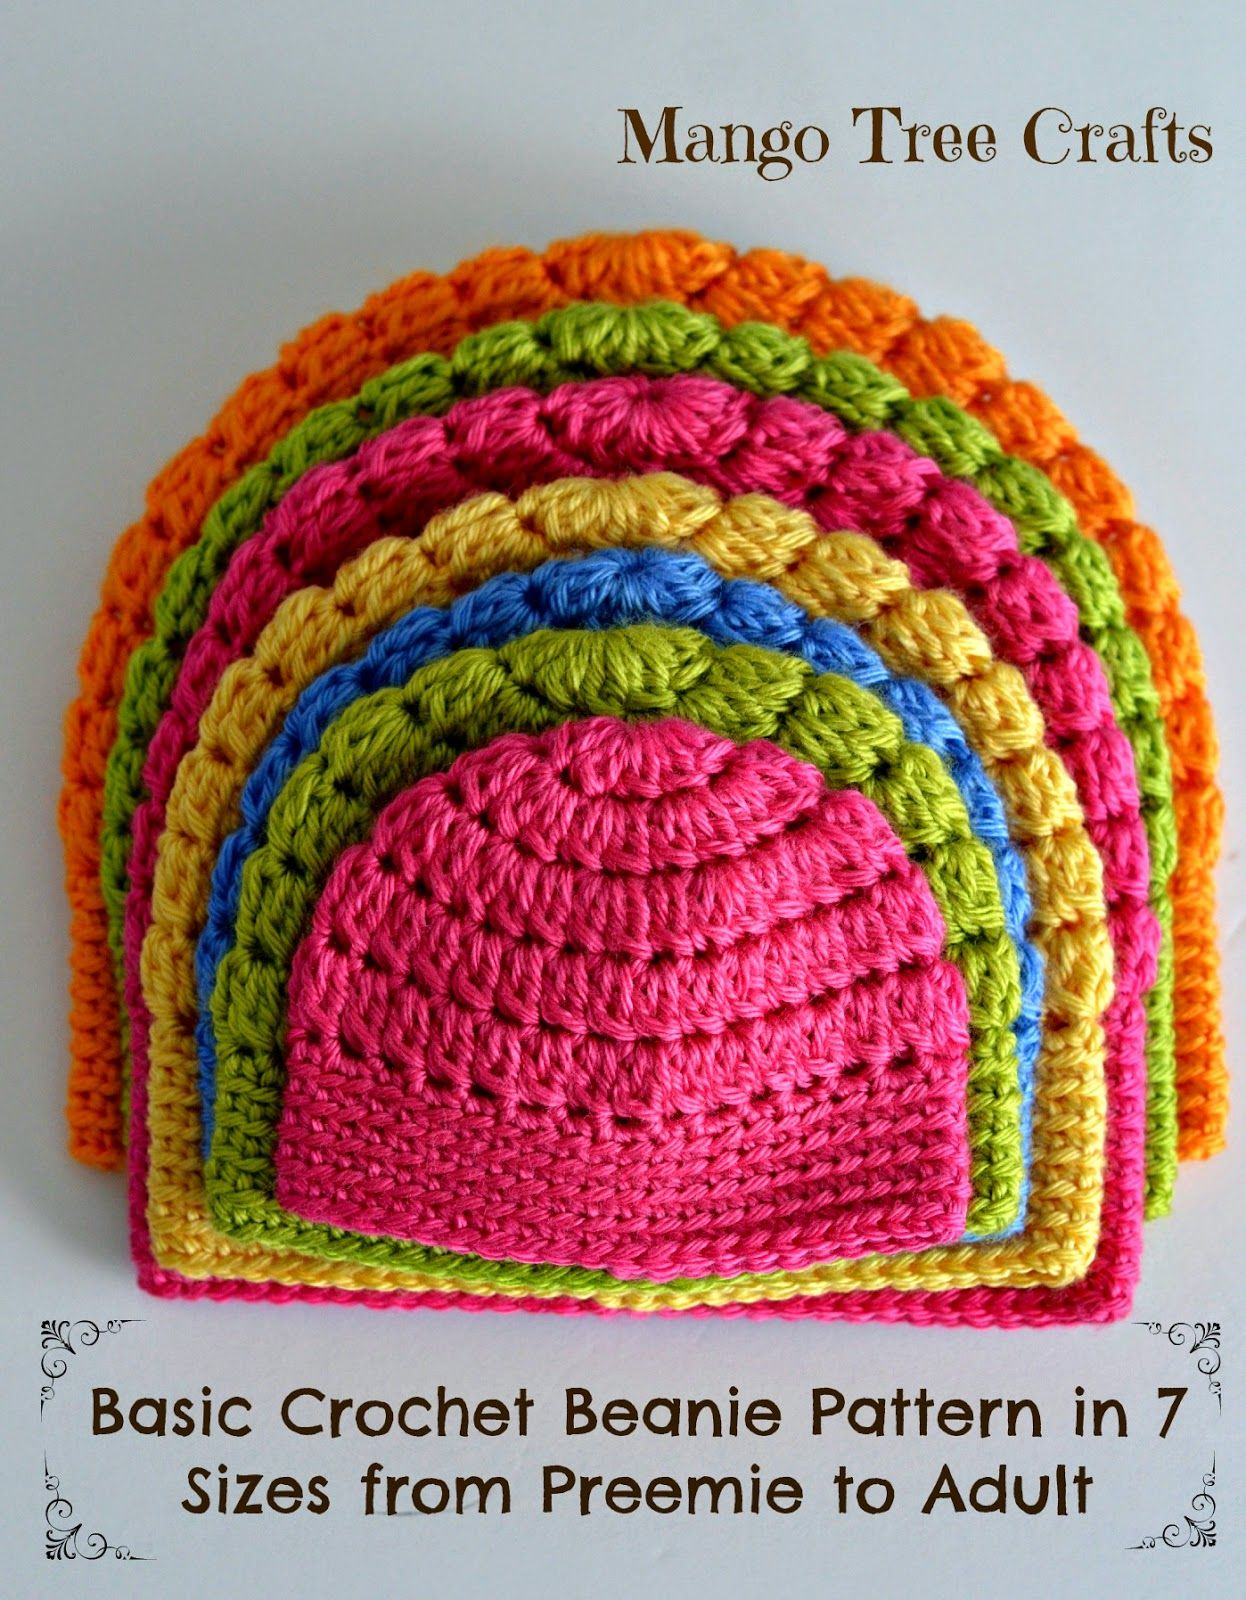 Beginner Crochet Beanie Pattern Creative Knitting And Crochet Projects You Would Love Crochet